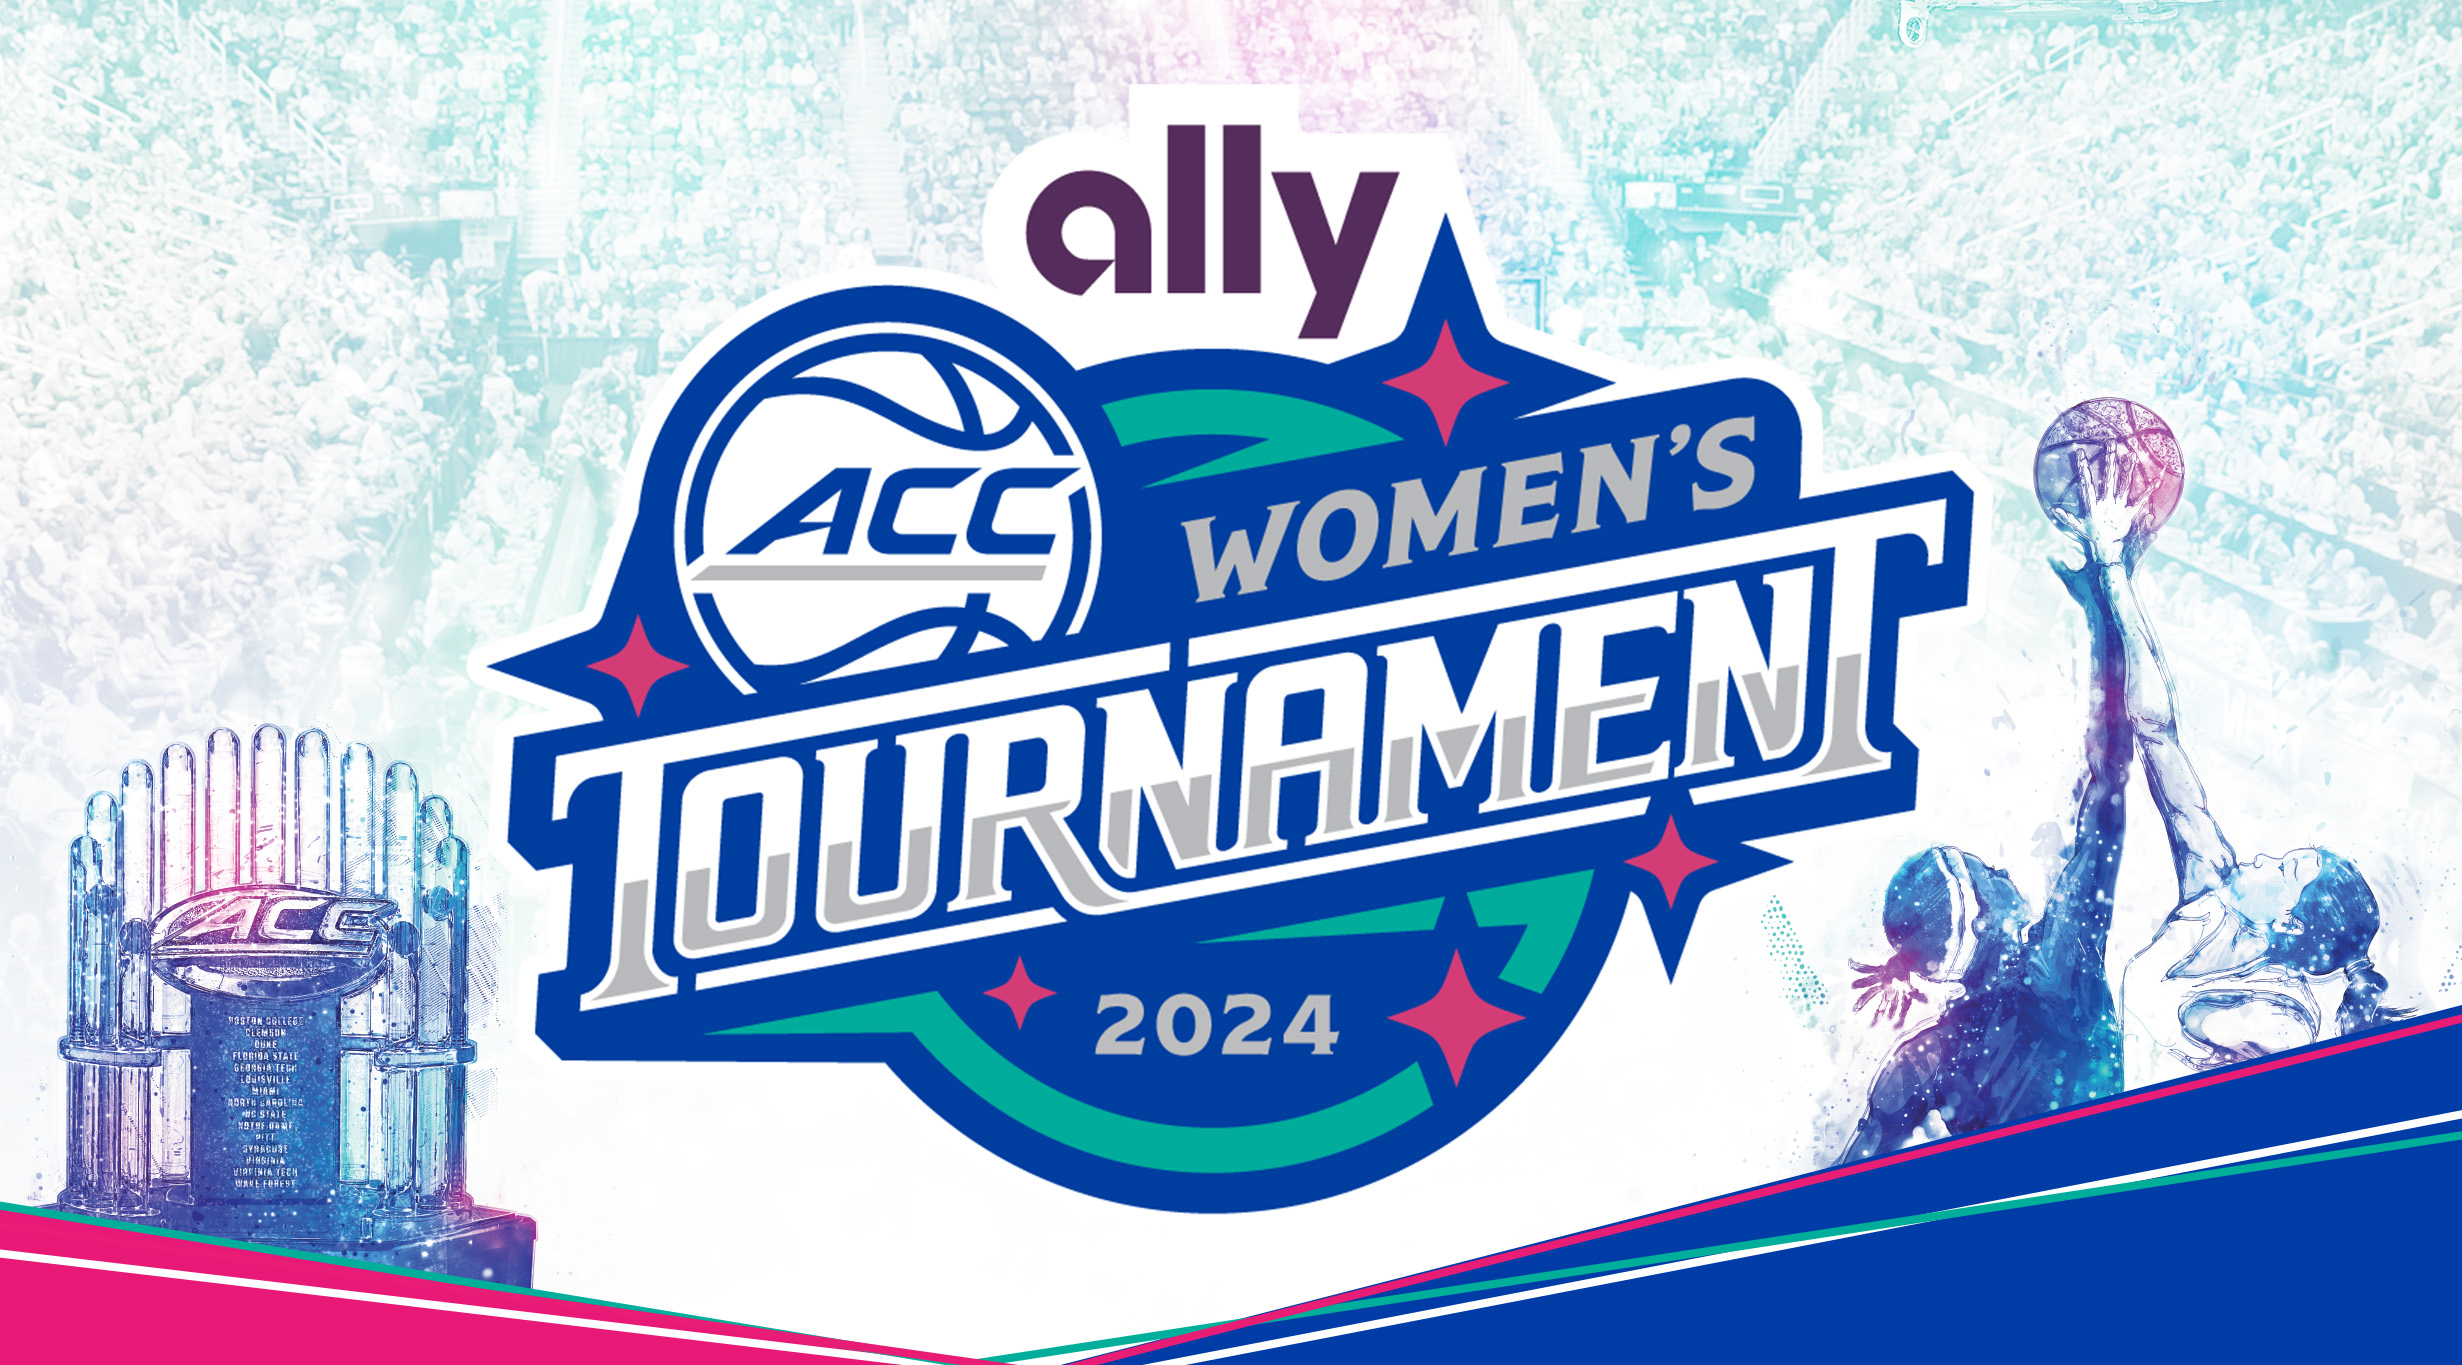 Ally ACC Women’s Basketball Tournament